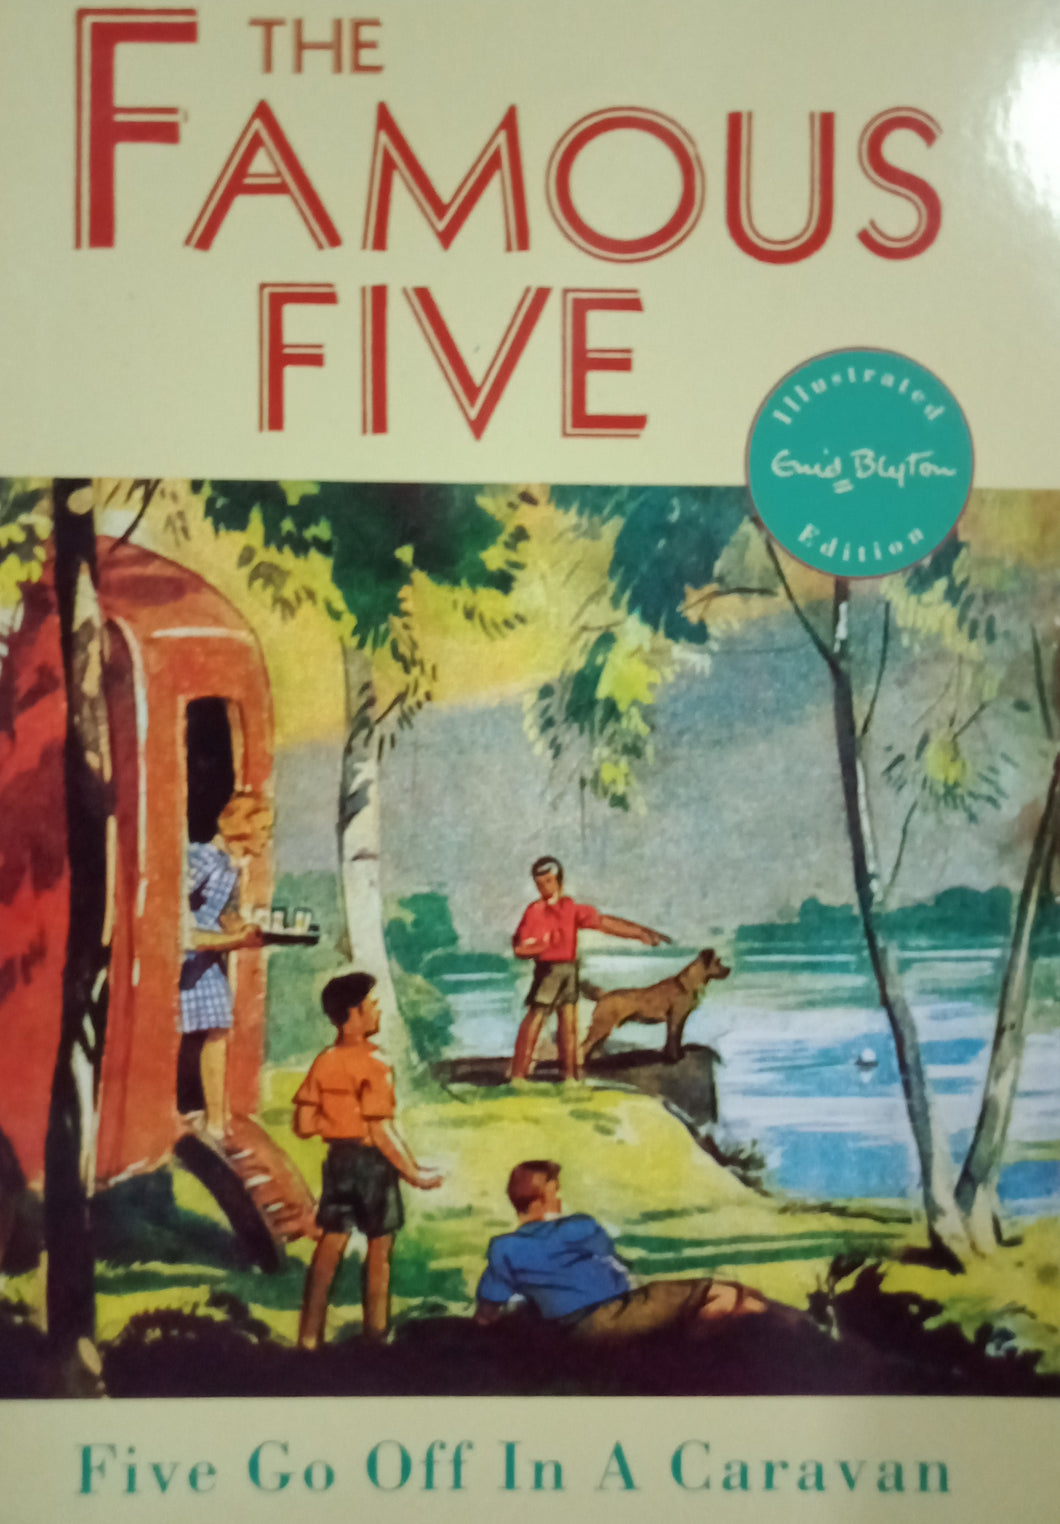 The Famous Five: Five Go Off In A Caravan by Enid Blyton